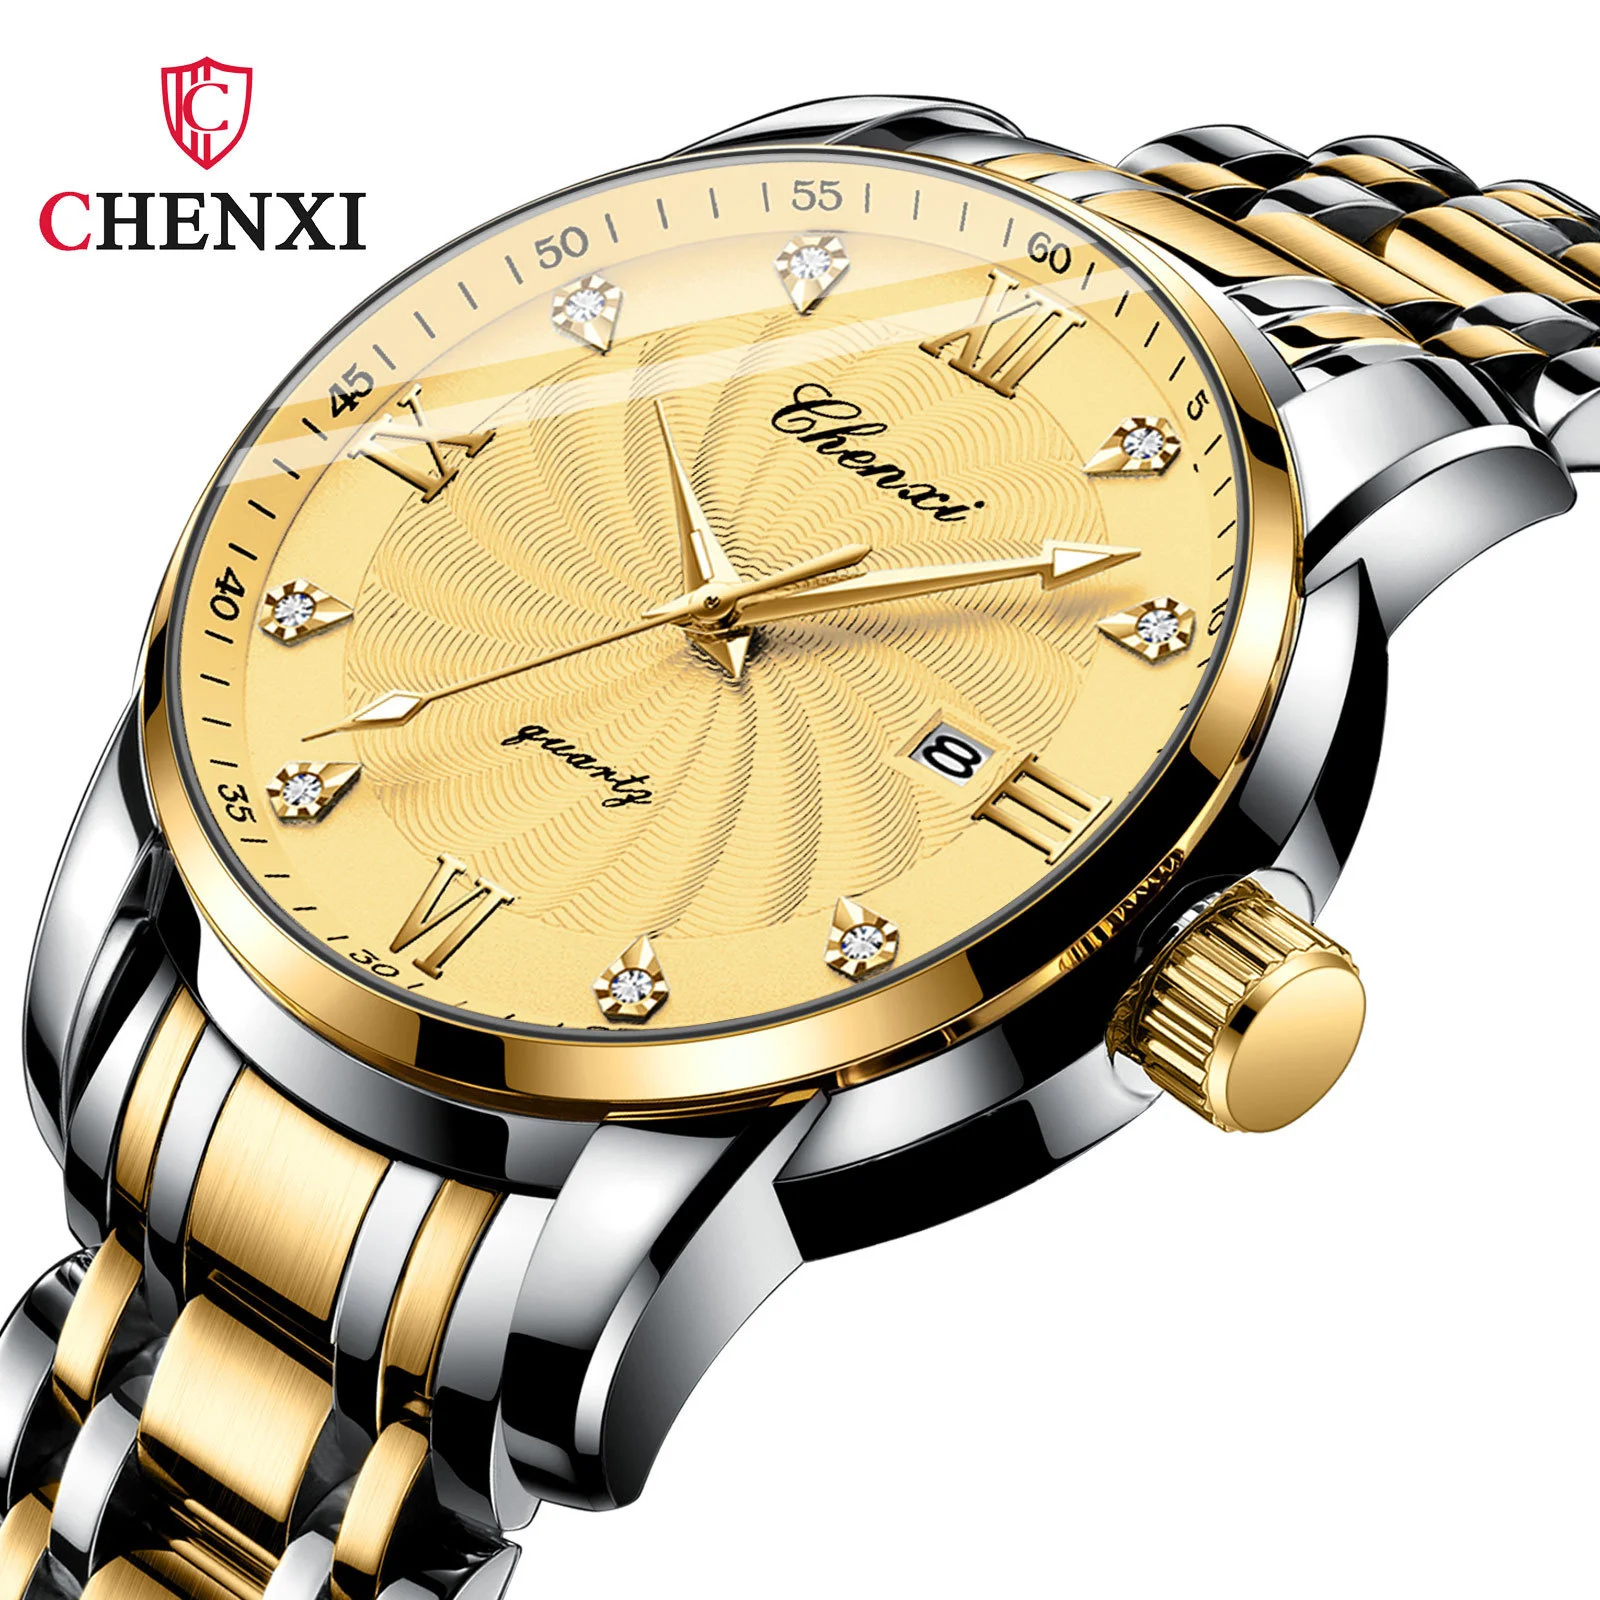 

CHENXI 8221 Men's Quartz Watch Fashion Business Golden Steel Calendar Waterproof Luminous Pointer Wrist Watches for Male Gift